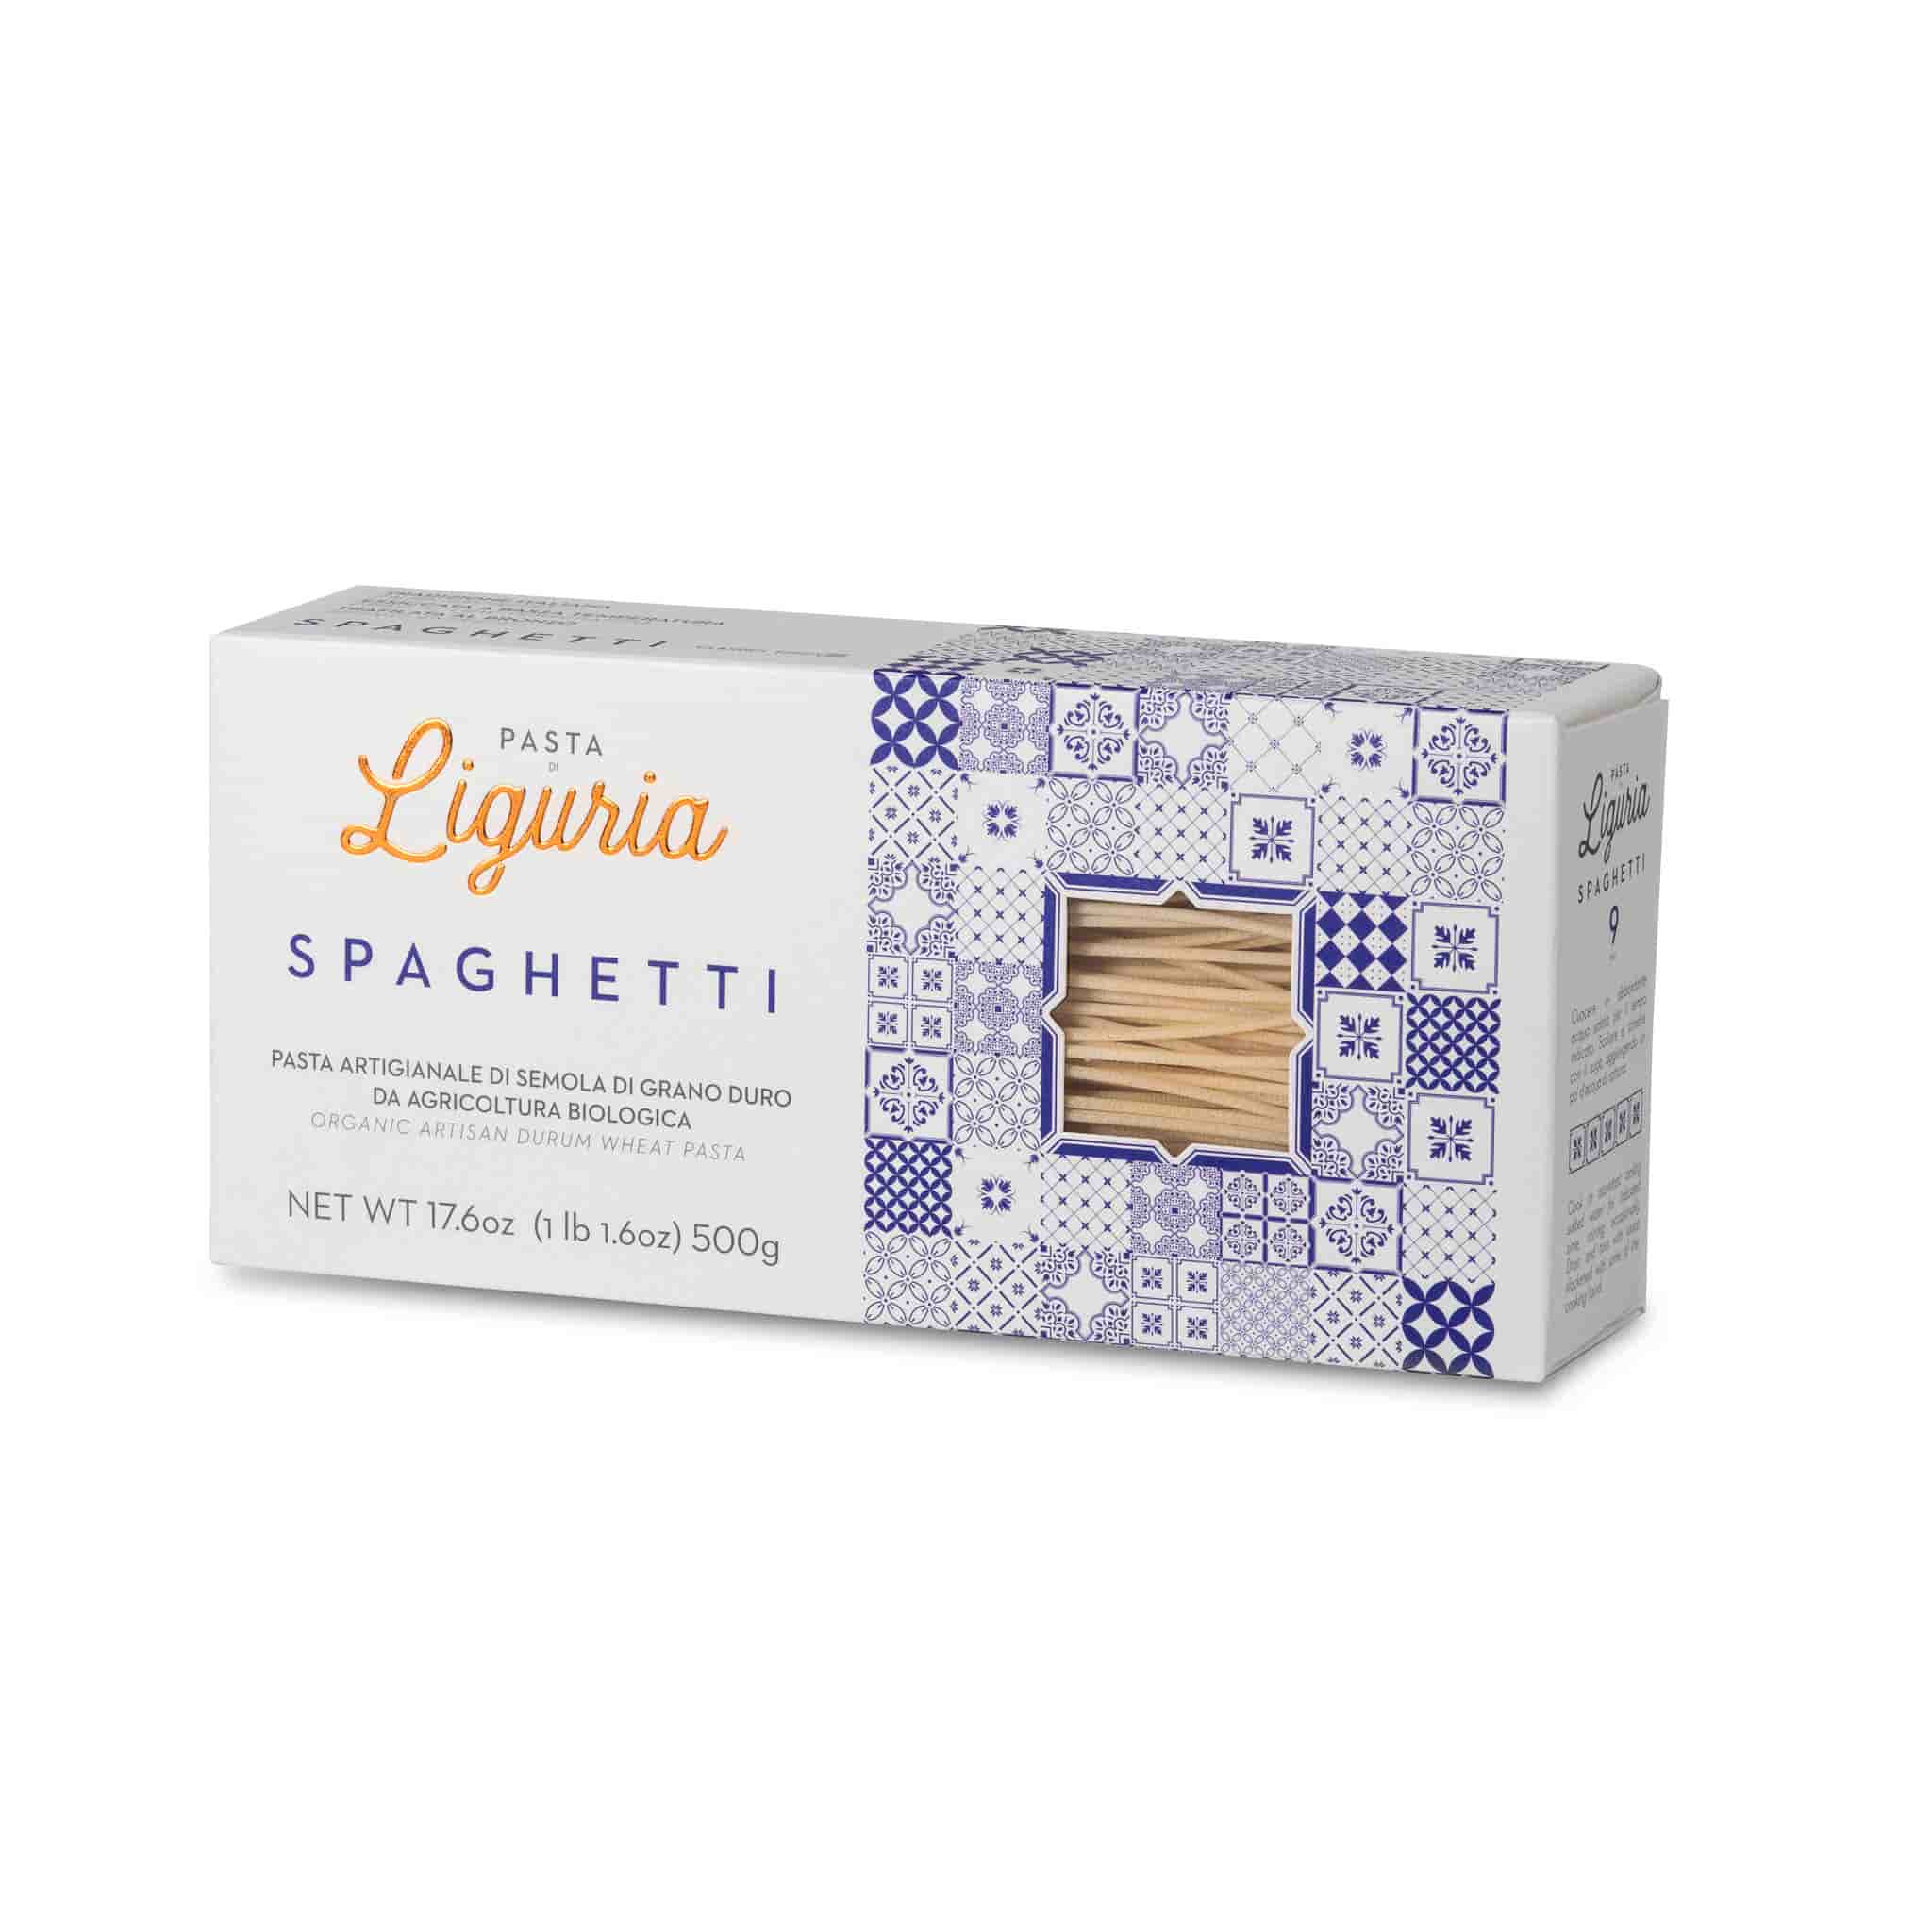 Pasta Liguria Spaghetti, 500g